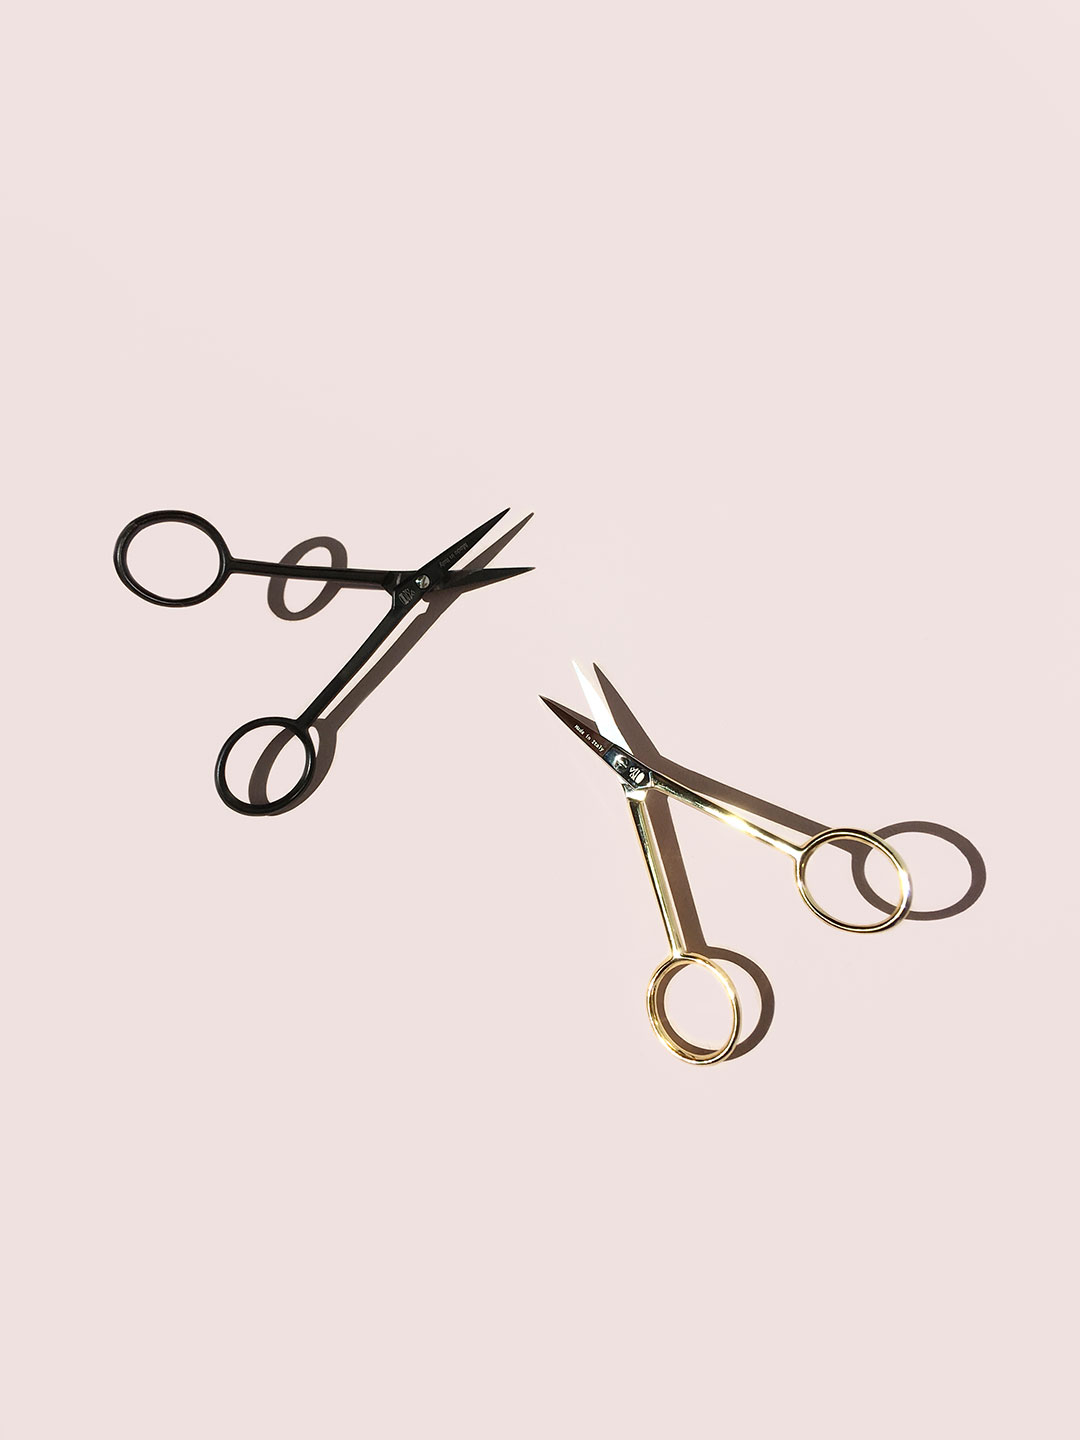 Fine Trimming Scissors - Gold